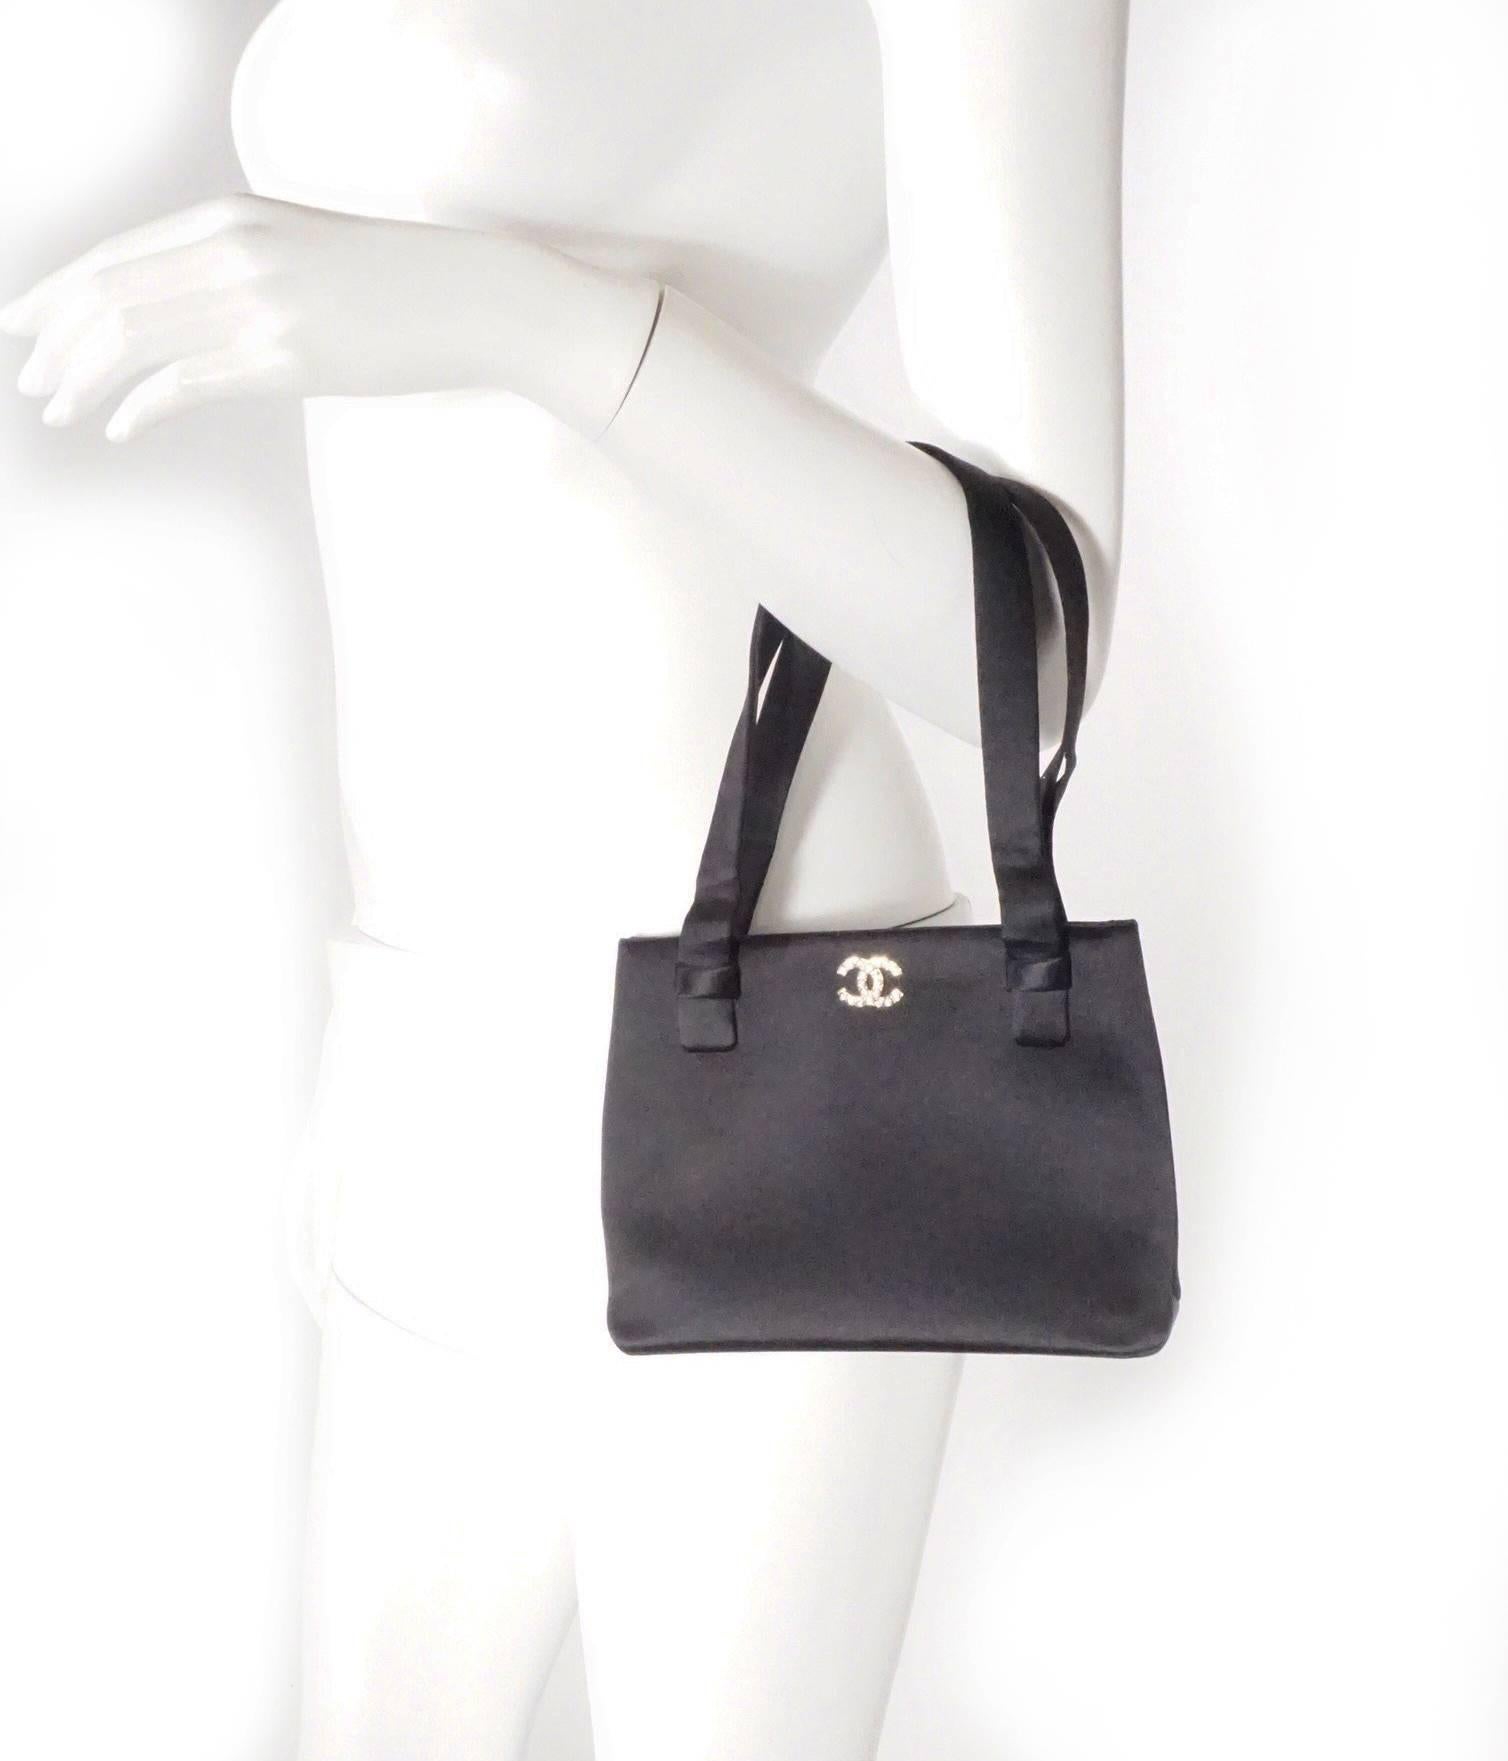 Chanel black satin evening bag with adorned 